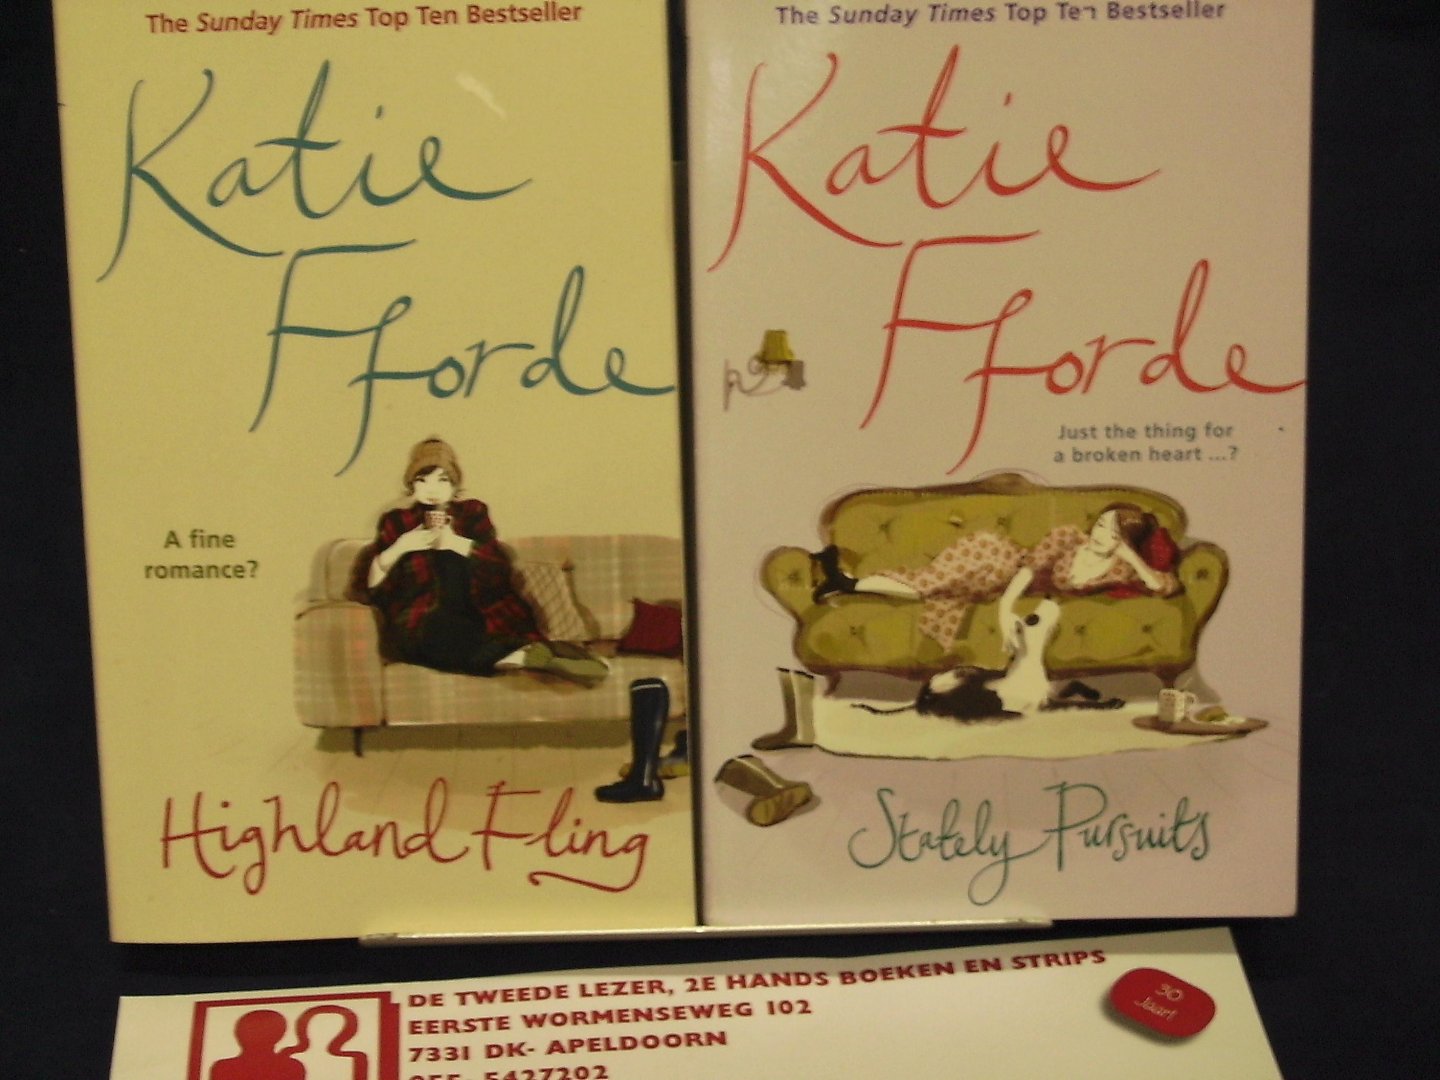 Fforde, Katie - Highland Fling  ; A fine romance ?